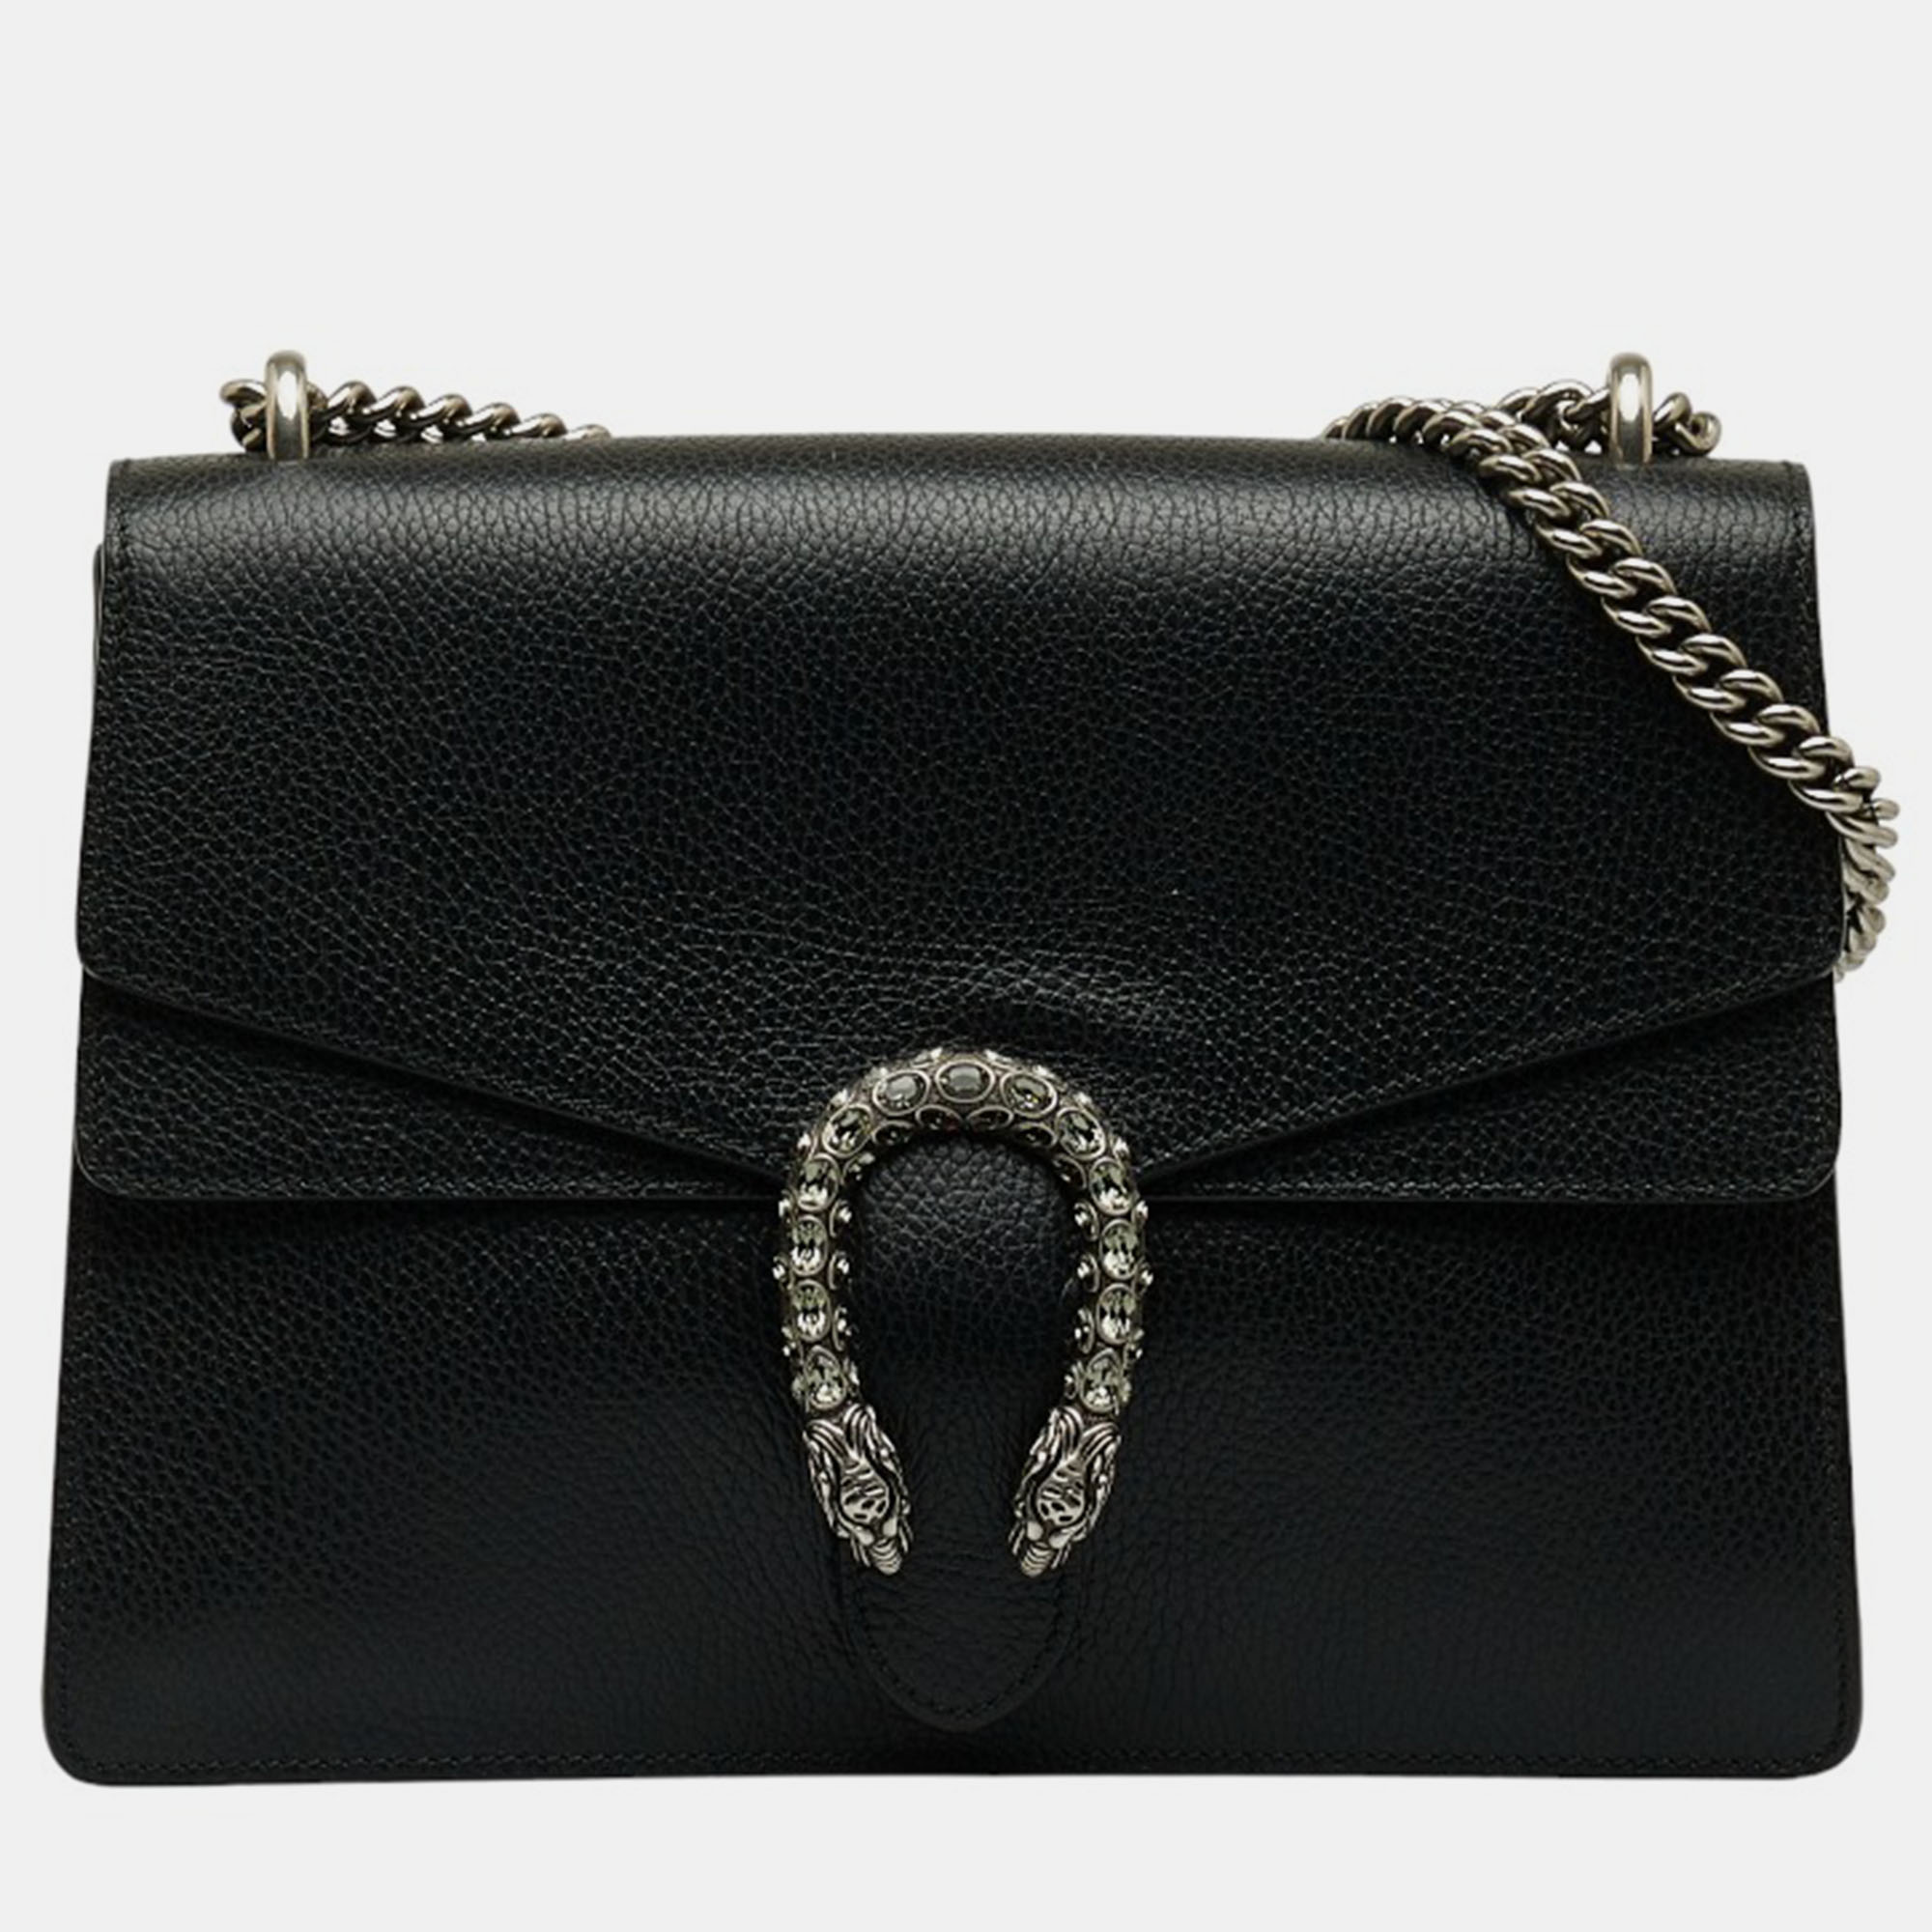 Gucci Black Leather Medium Dionysus Shoulder Bag